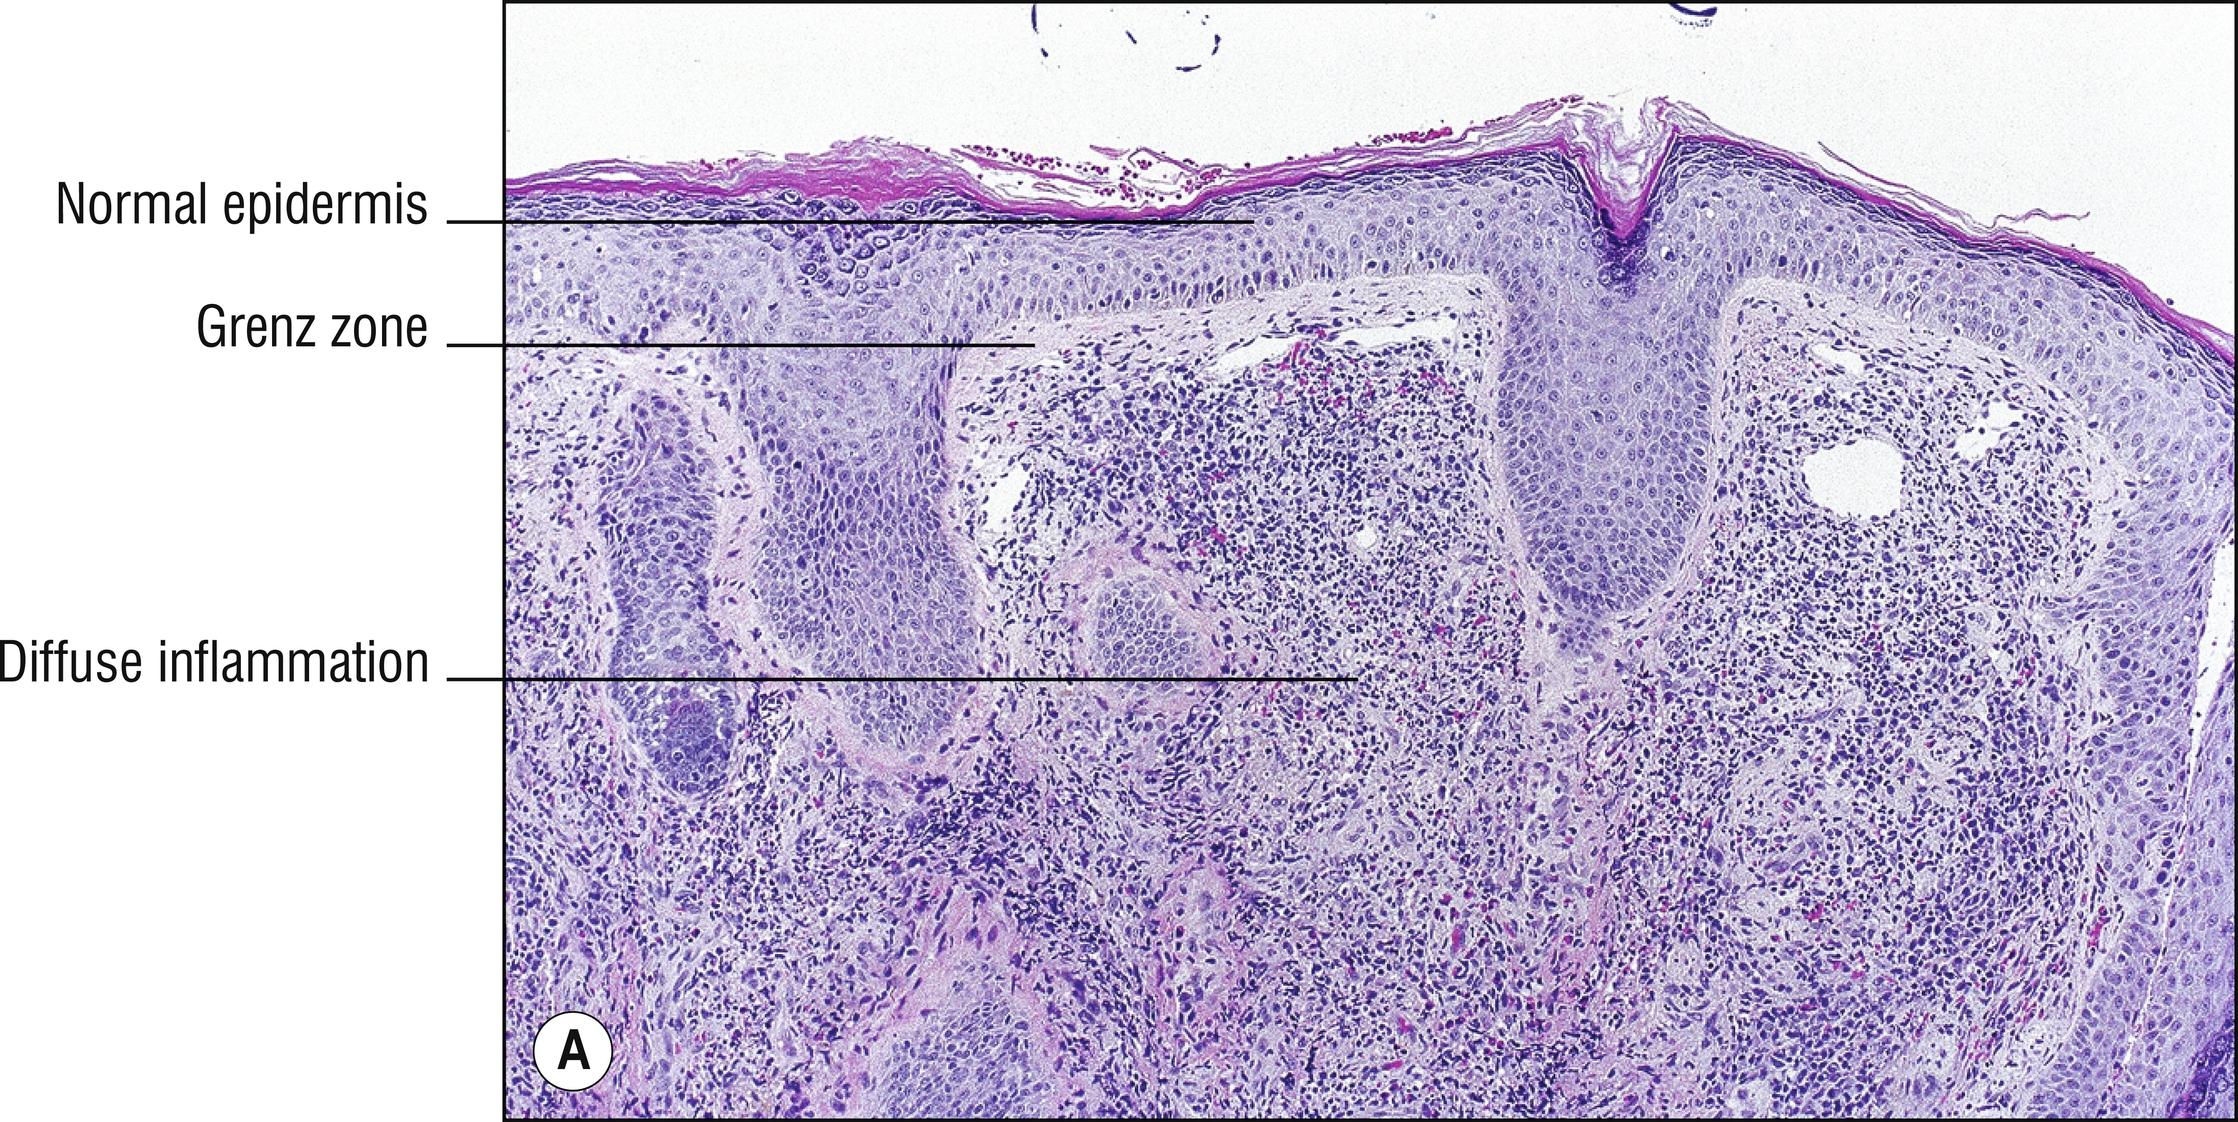 Fig. 4.2, A Granuloma faciale (low mag.).